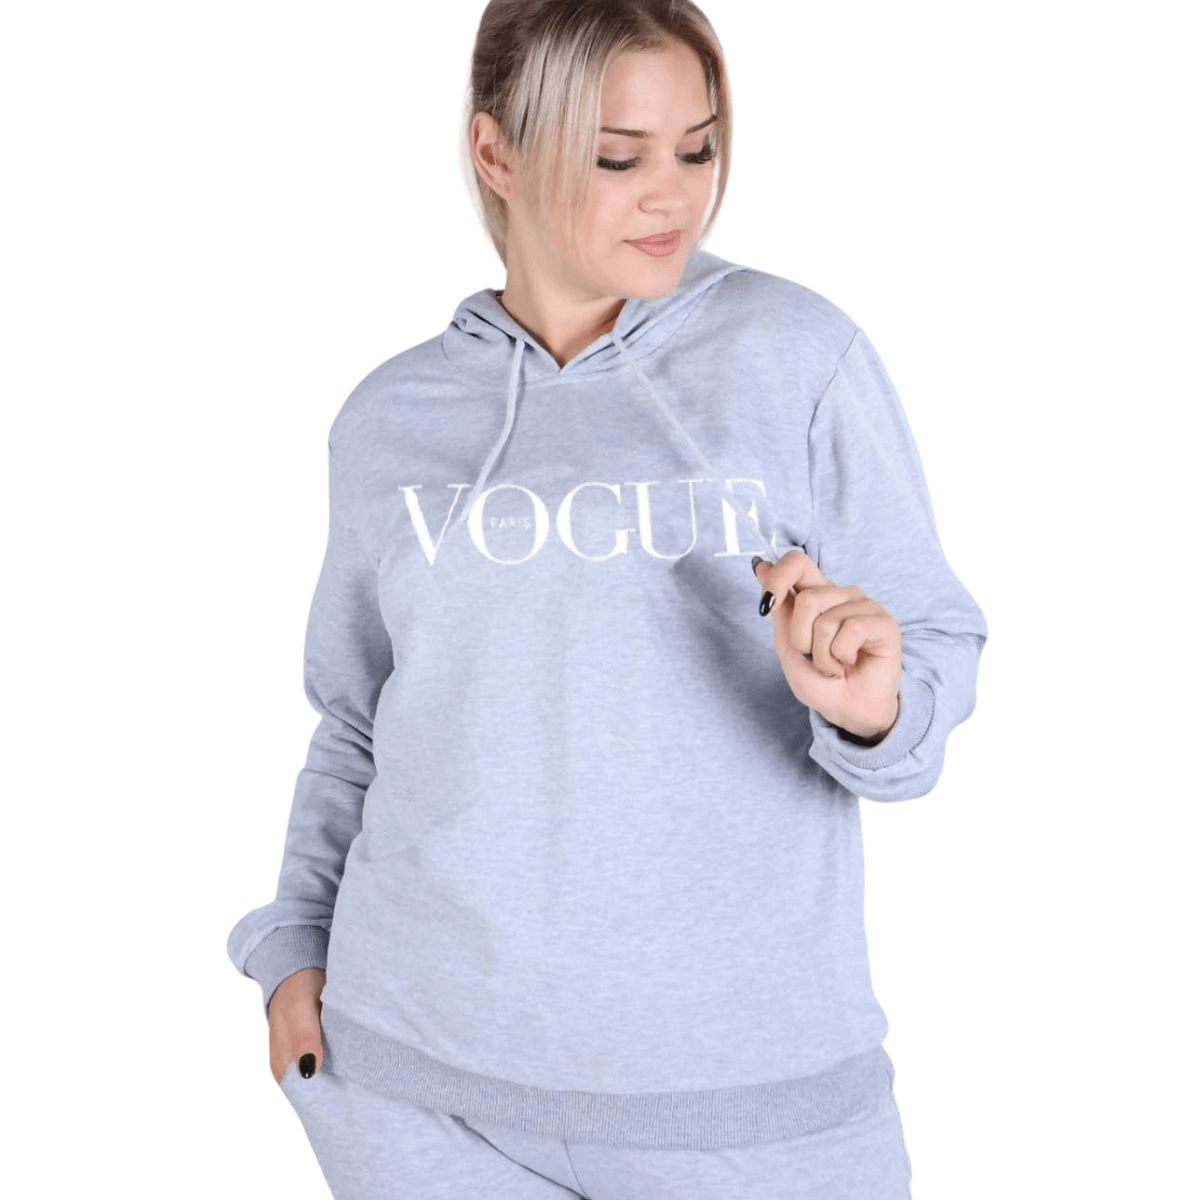 Marlie Plus Size Vogue Hooded Loungewear Set - La Belle Gina Boutique